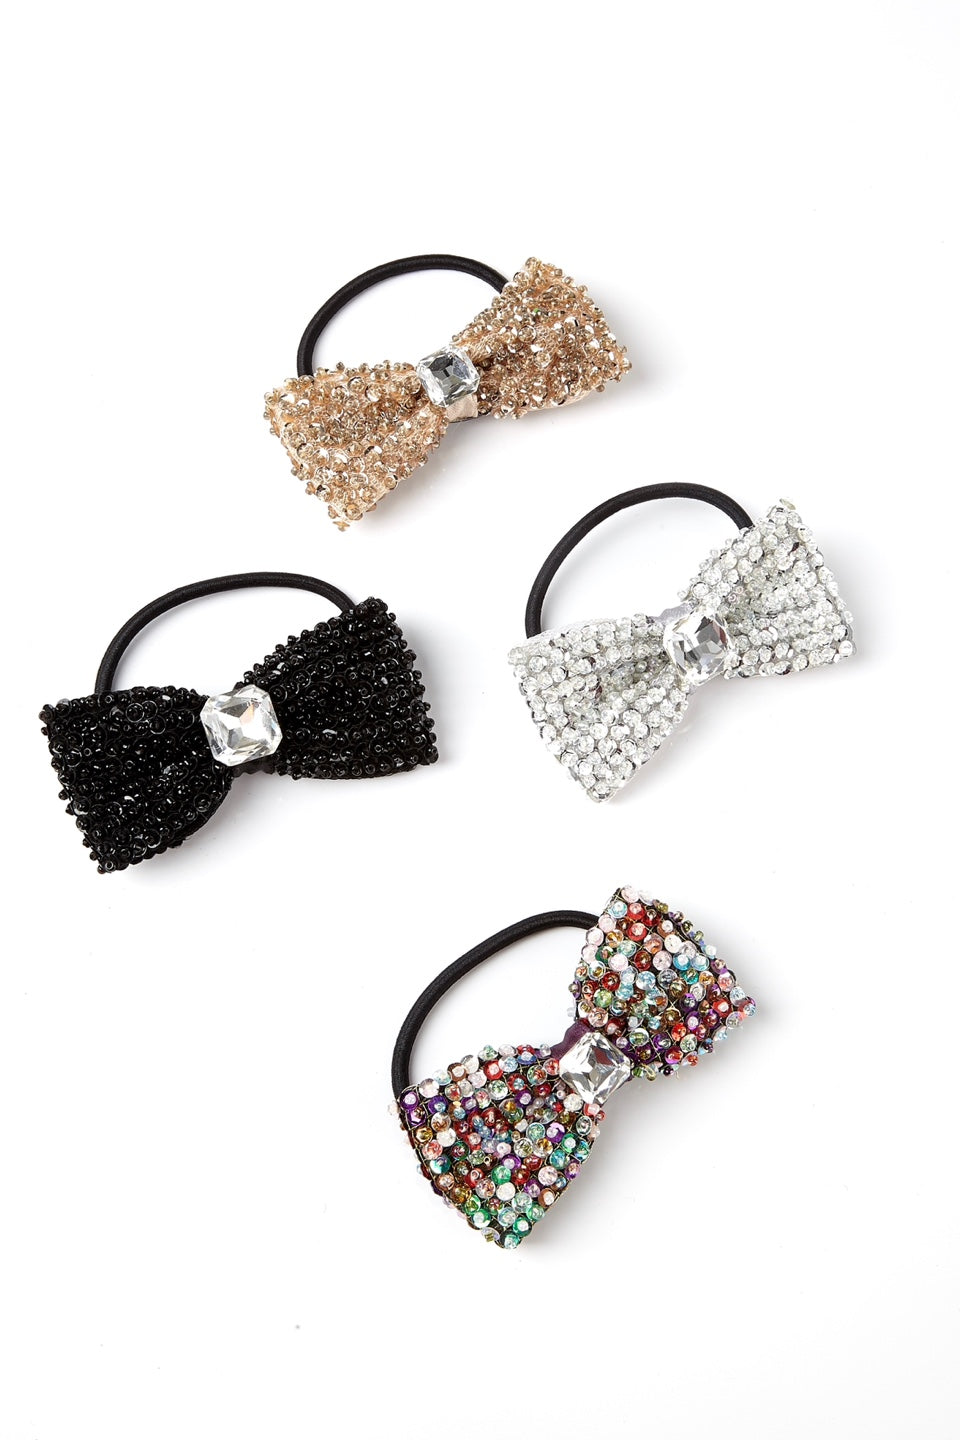 Big Bow Crystal beads Hair Tie & Bracelet handmade – Little Light